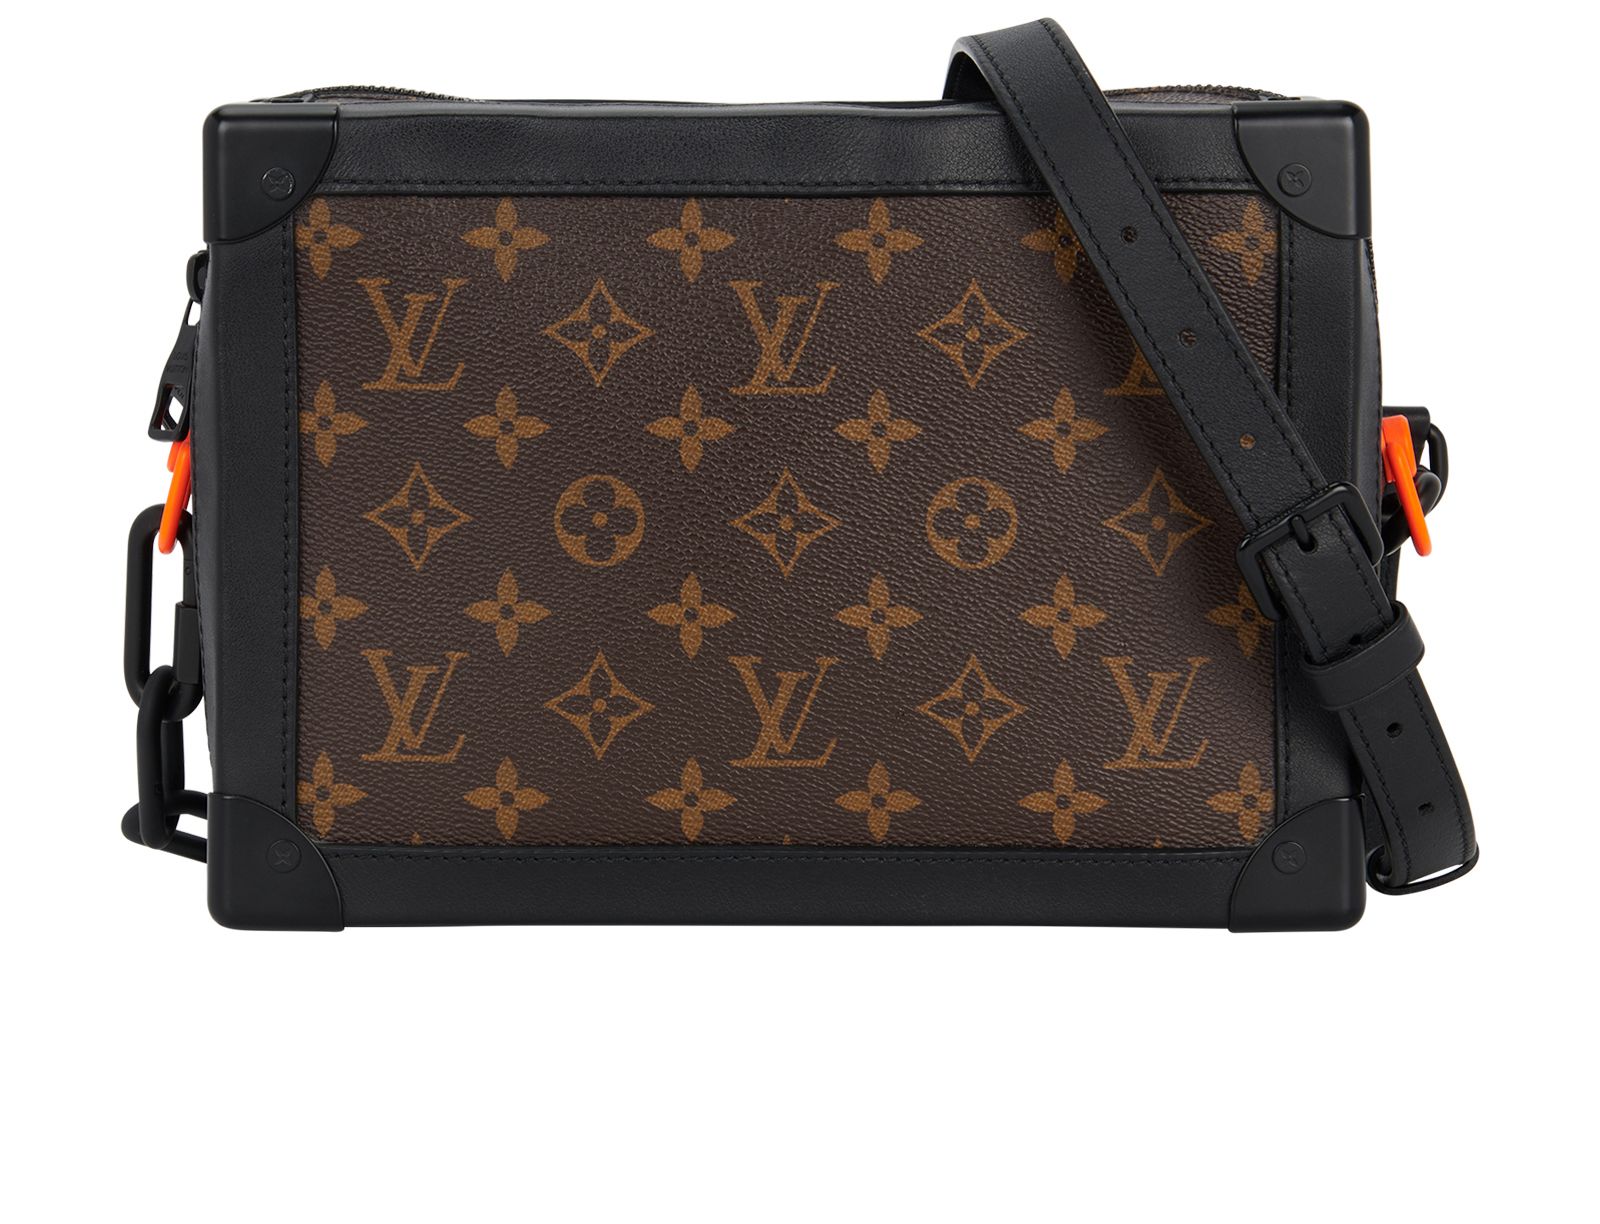 Louis Vuitton, Bags, Louis Vuitton Box And Dust Bag